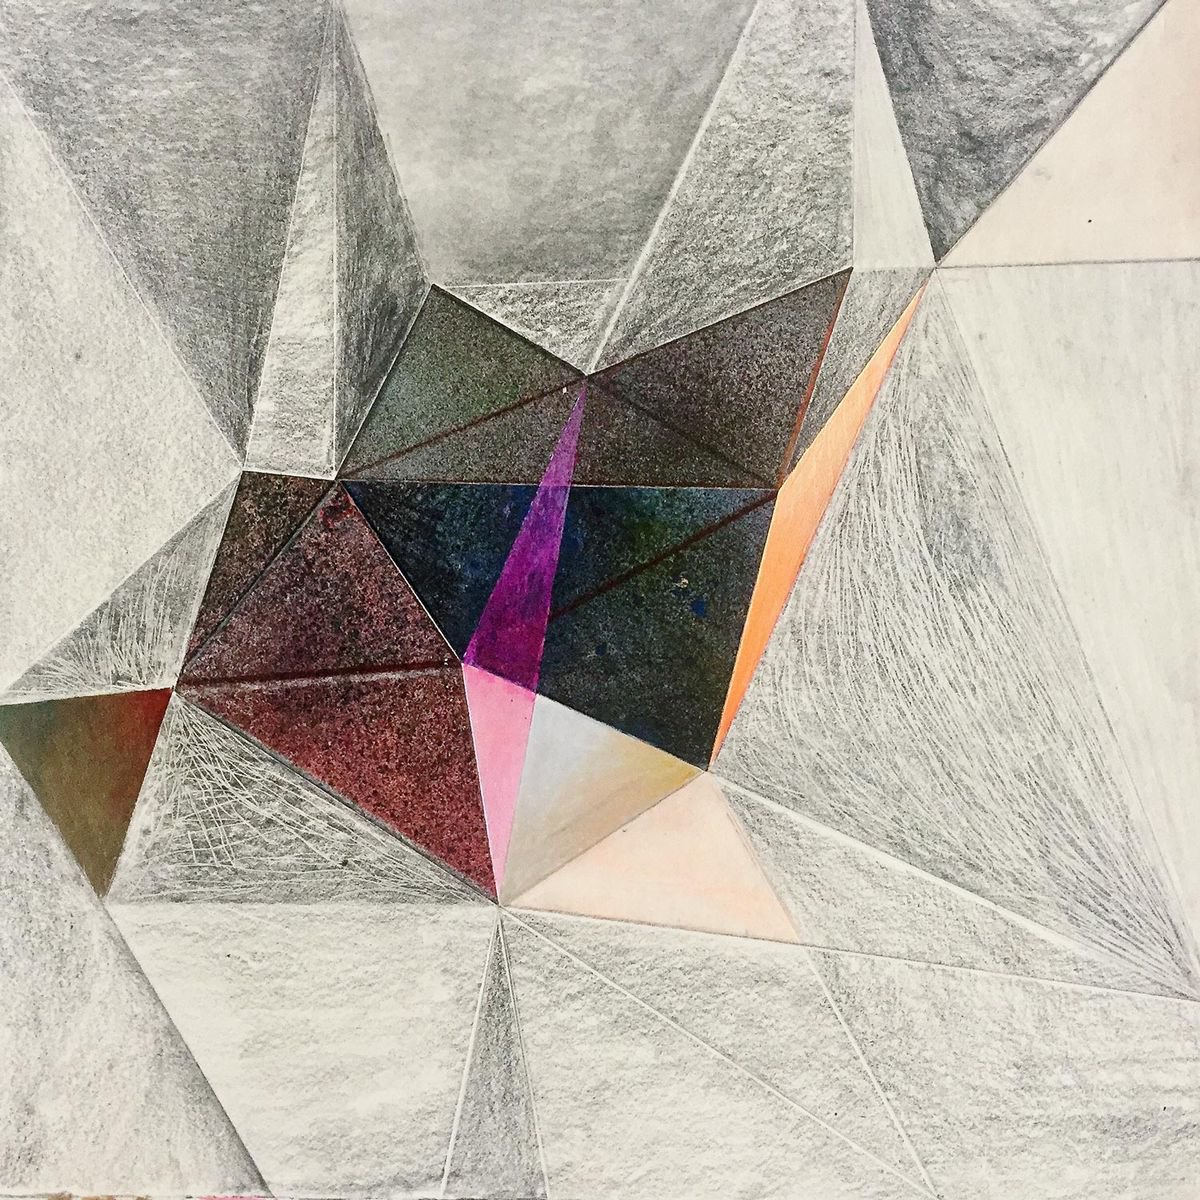 geometric study 7 [watch dog] by Nancy Marisa Arlt